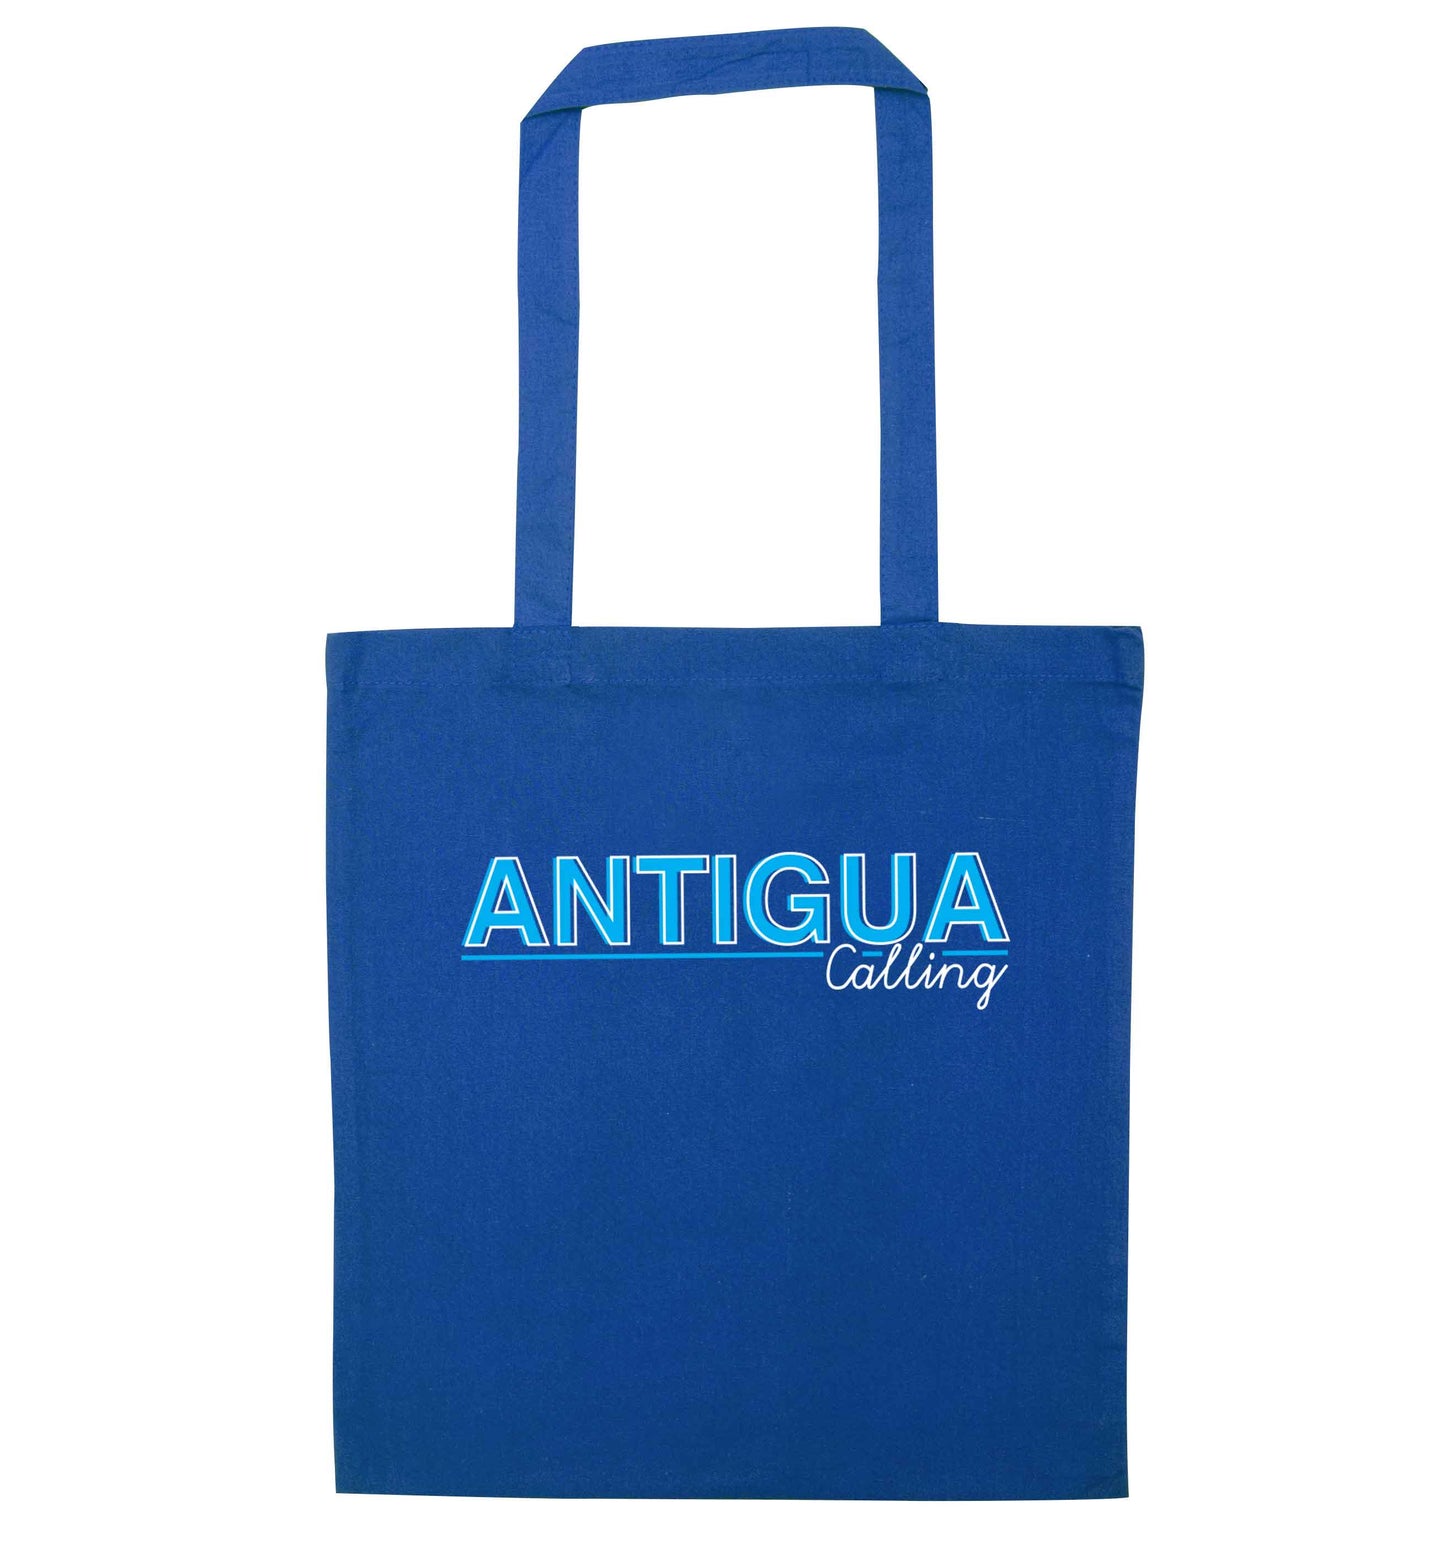 Antigua calling blue tote bag